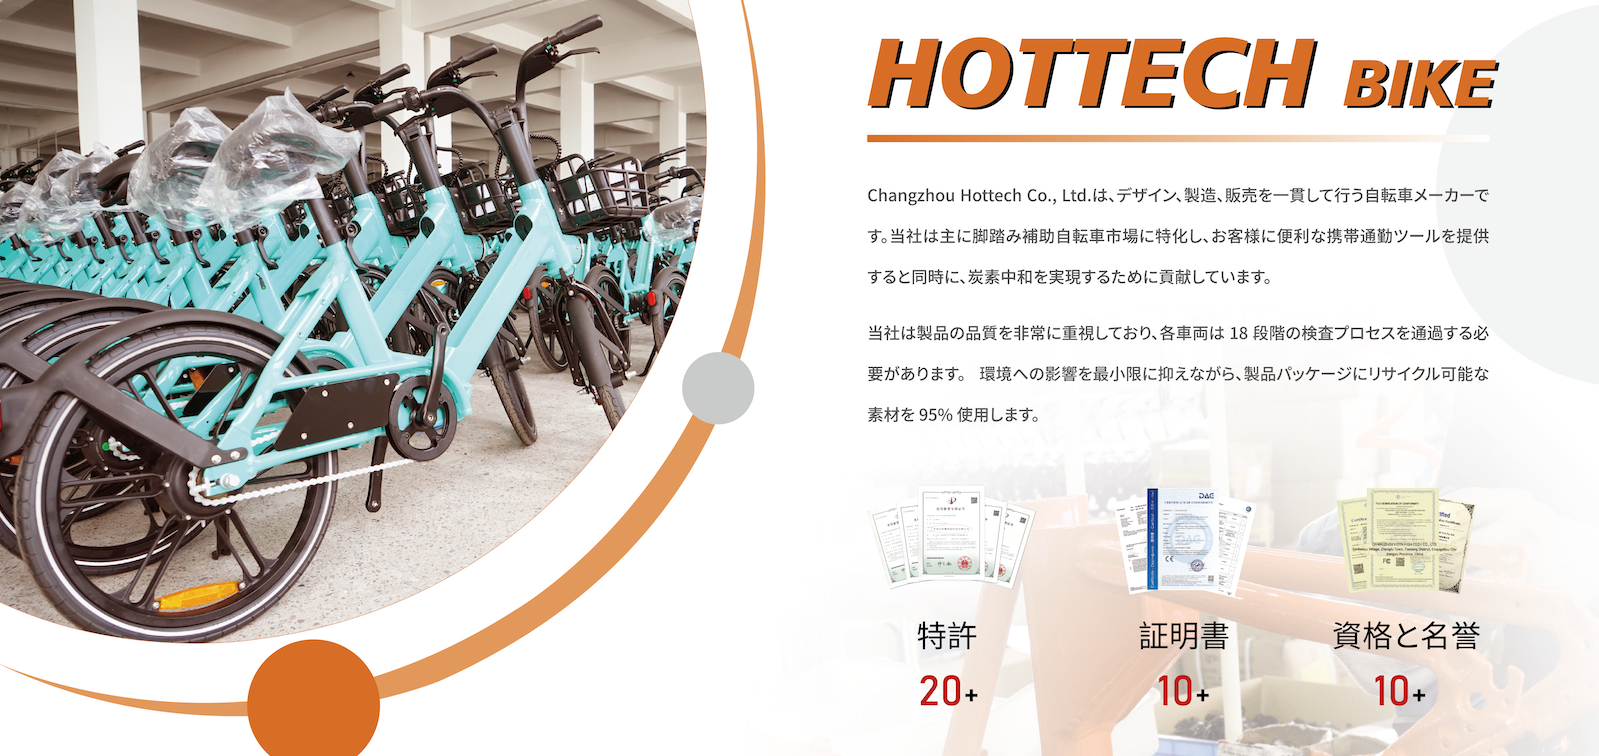 Hottdchbike to Tokyo Cycle mode